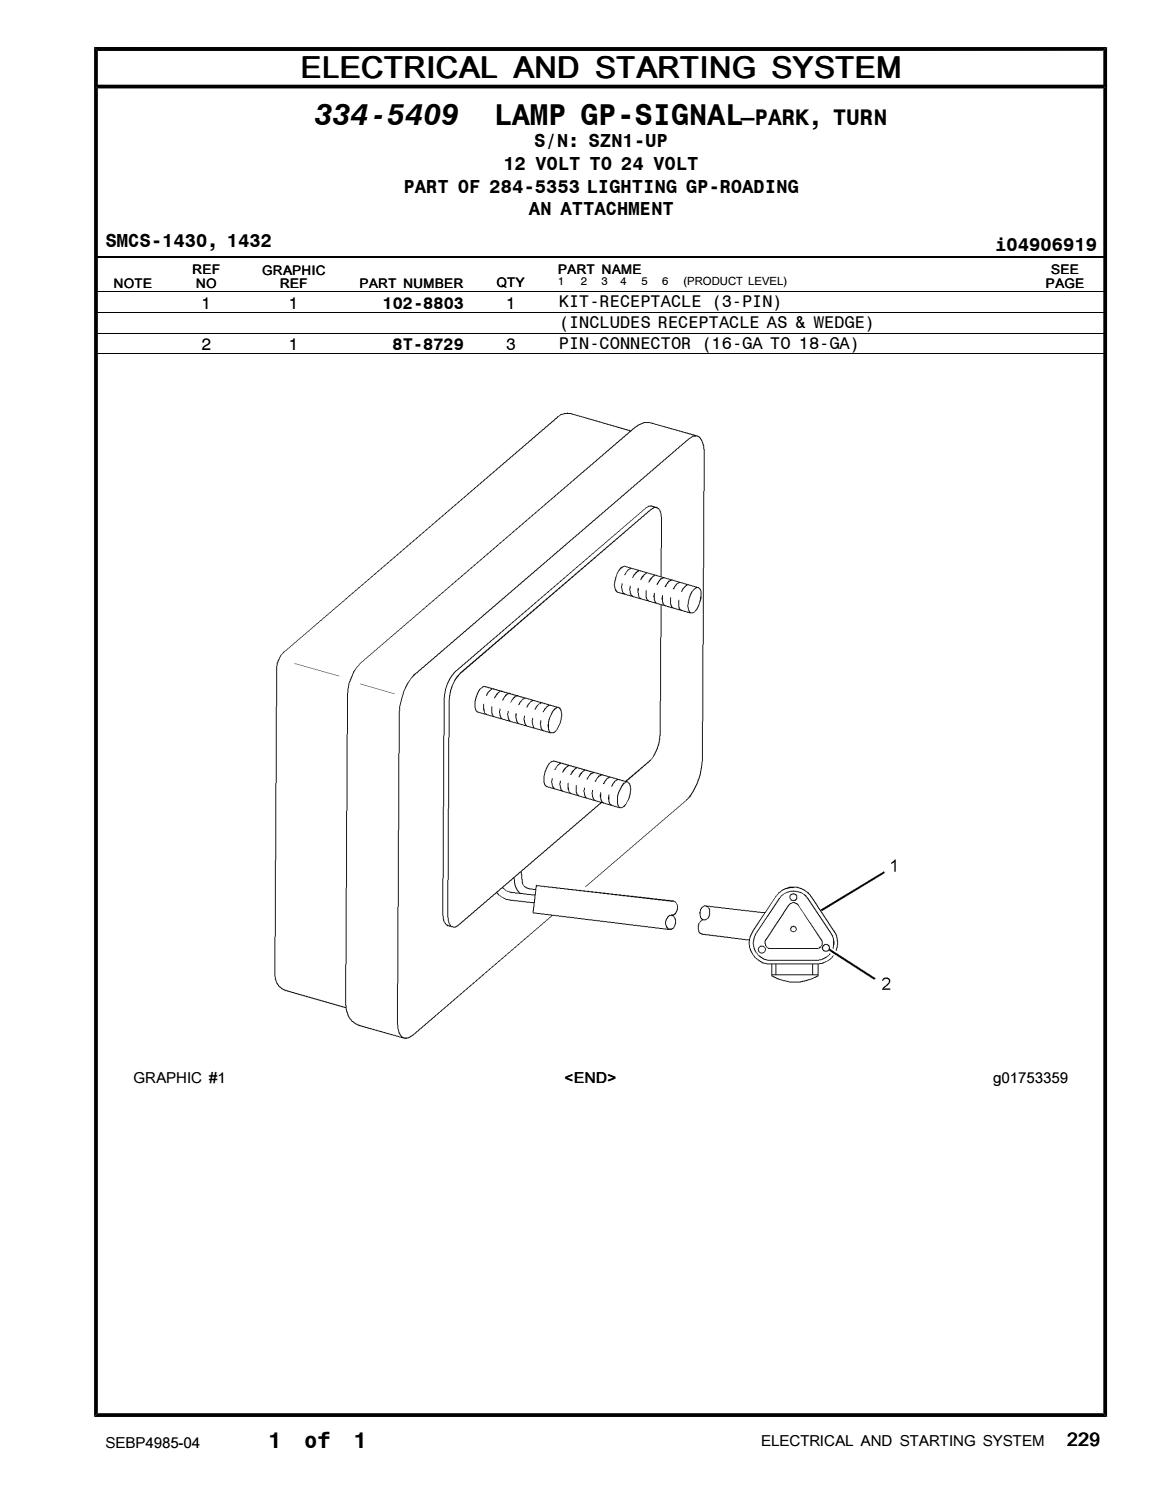 Online parts manual